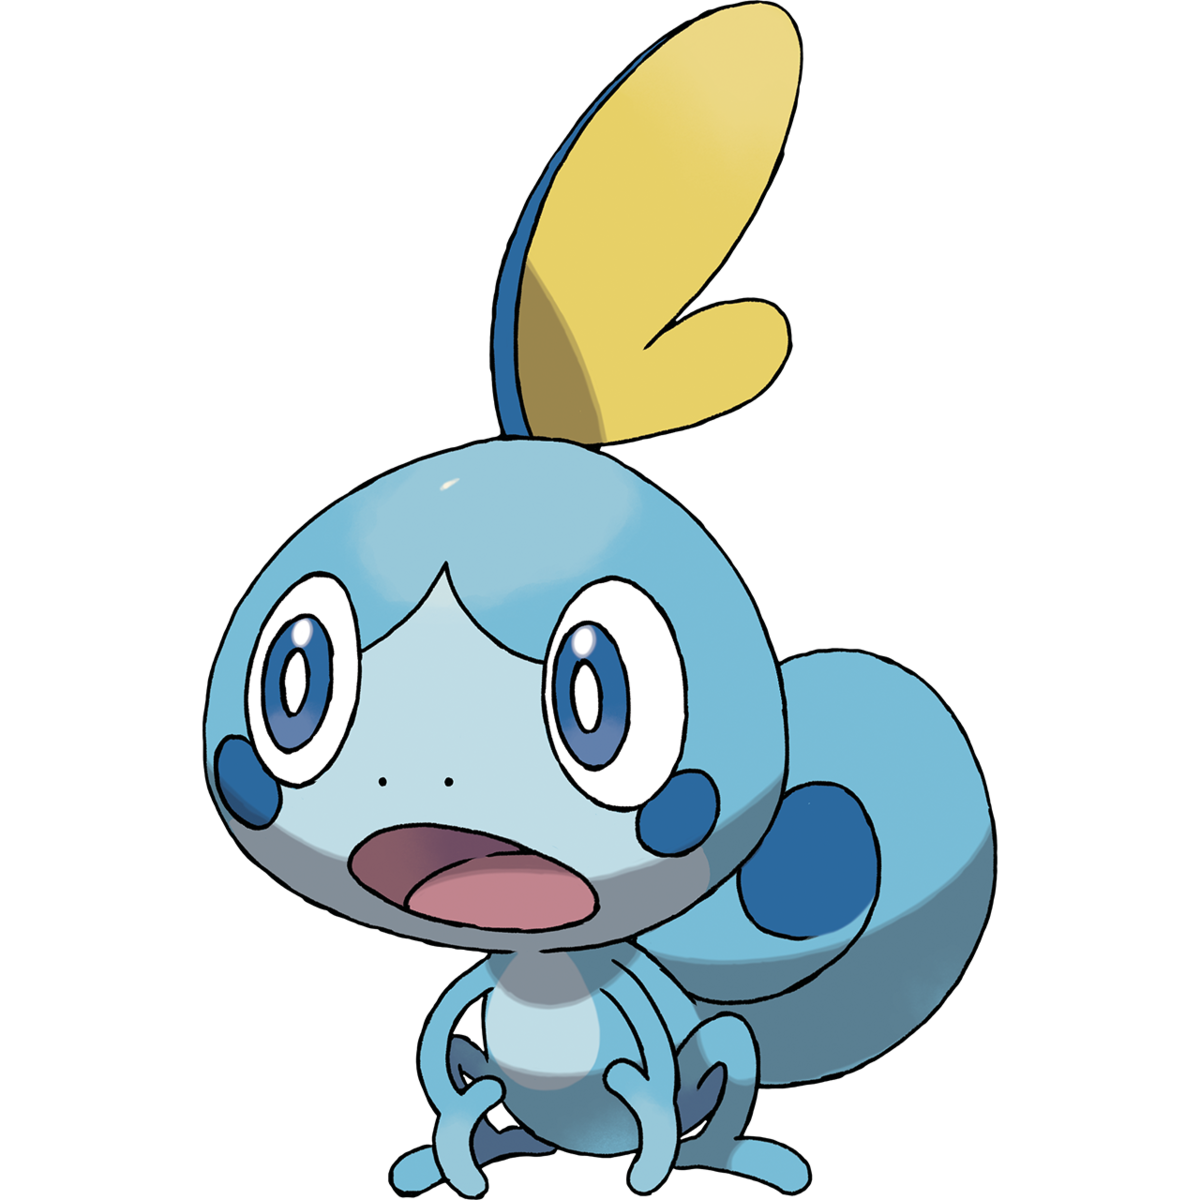 Check out this transparent Pokémon Sobble PNG image